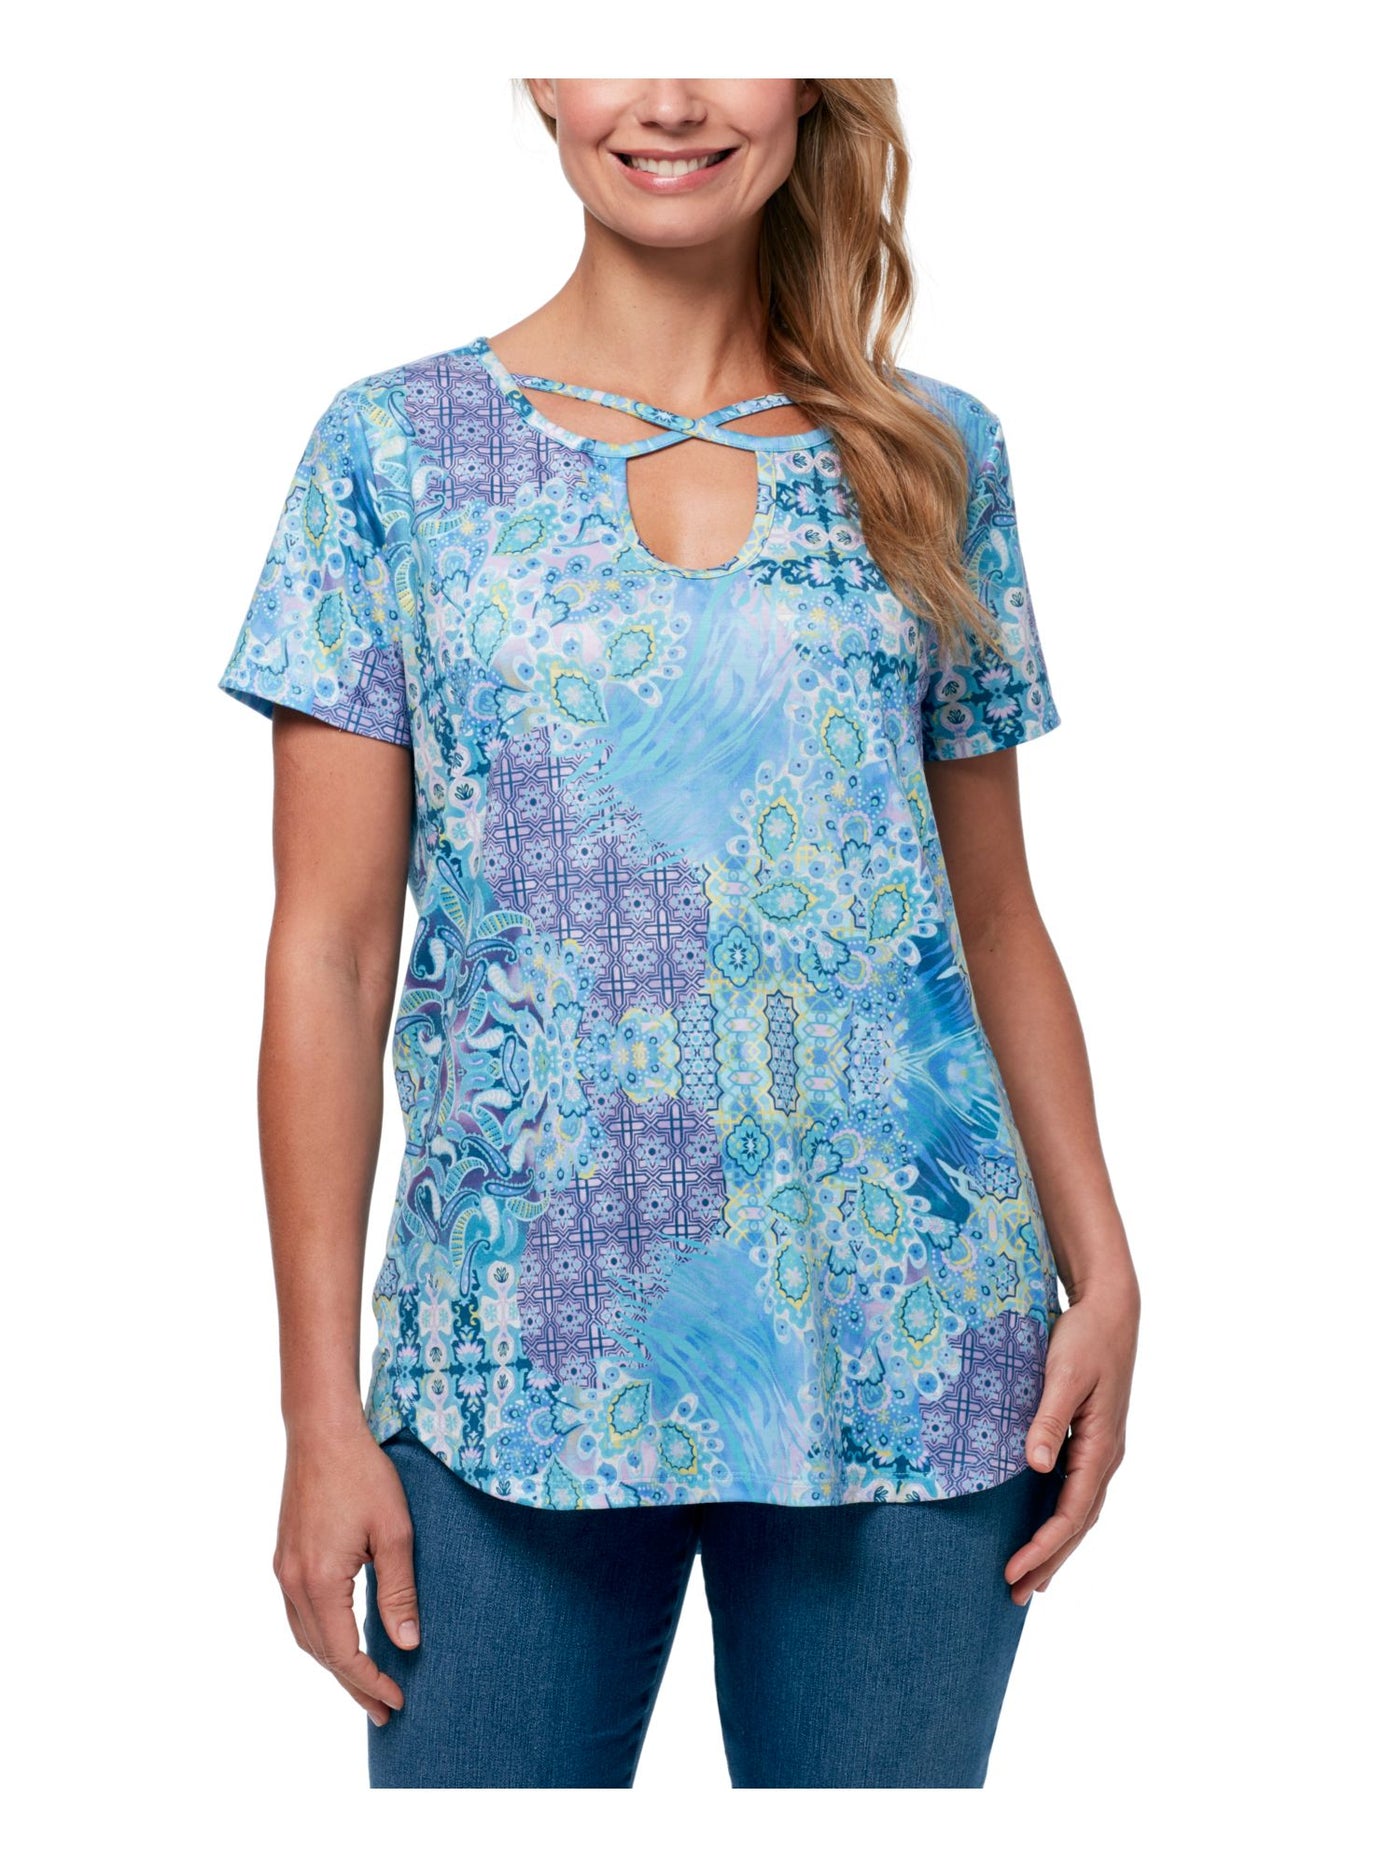 GLORIA VANDERBILT Womens Blue Printed Short Sleeve Keyhole T-Shirt M